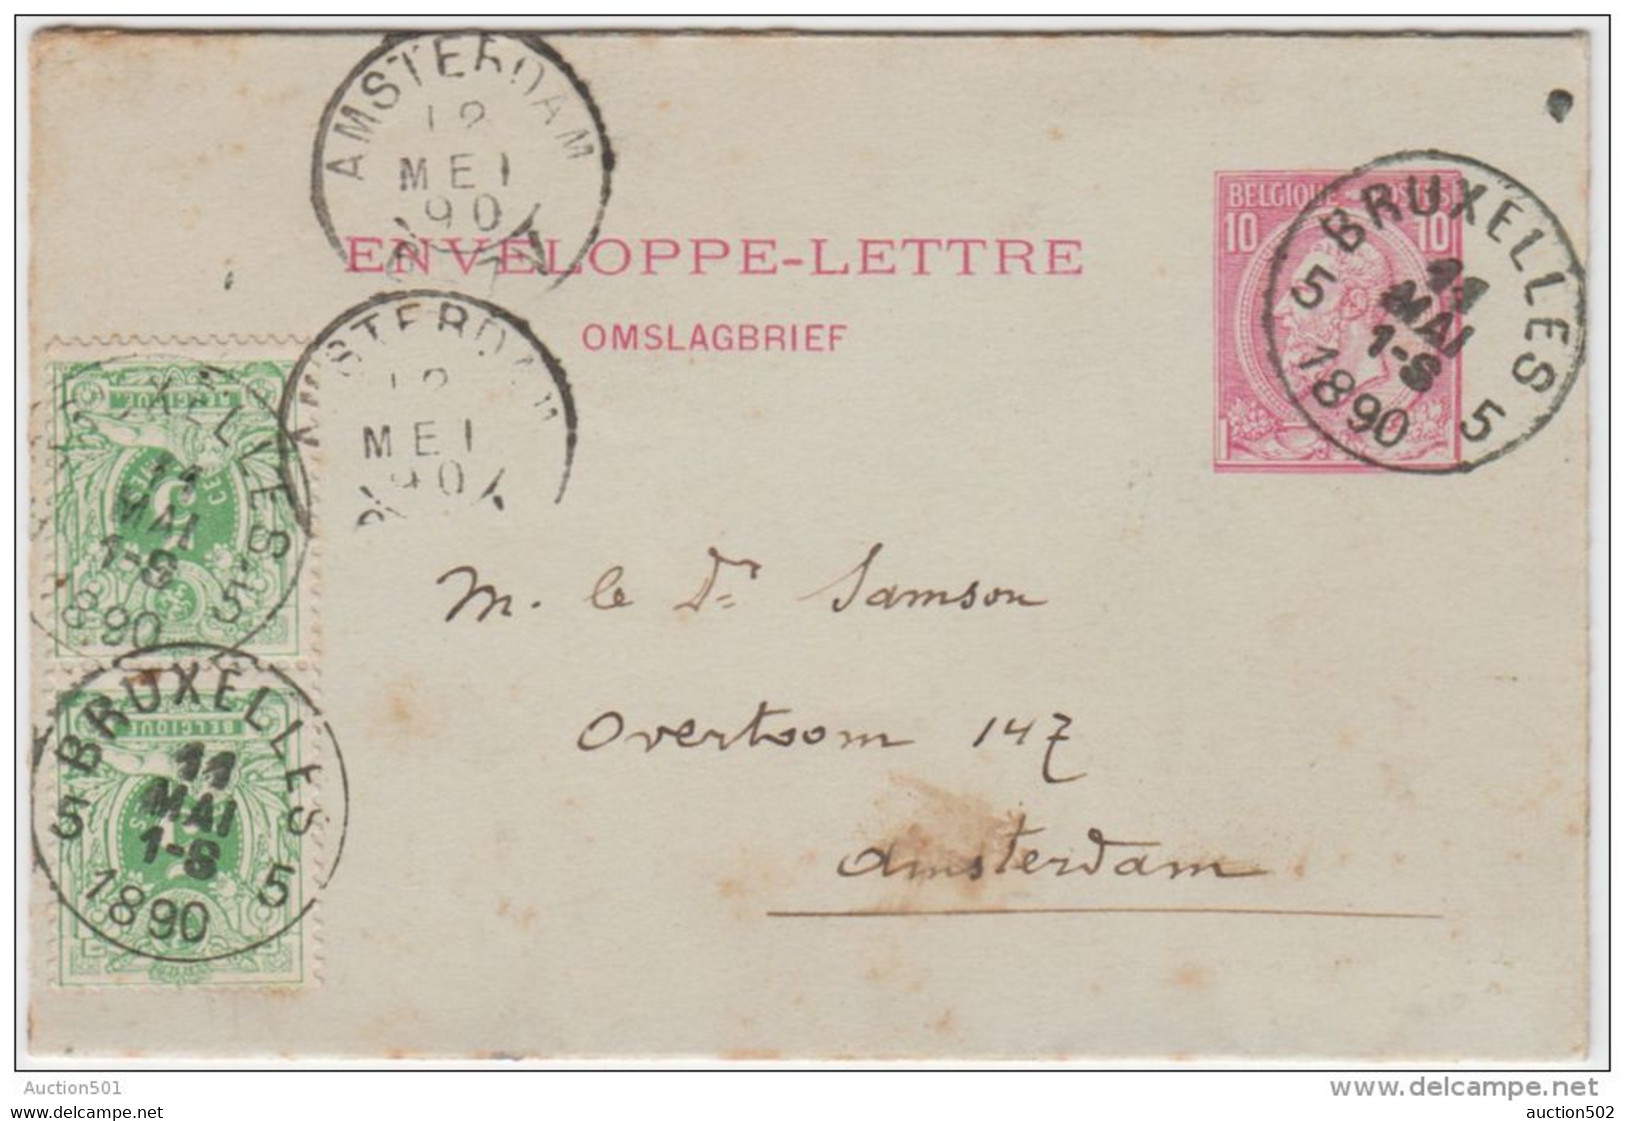 01933a Bruxelles 5 1890 Env. Lettre 1 TP 45 (2) V. Amsterdam C. Arrivée - Enveloppes-lettres